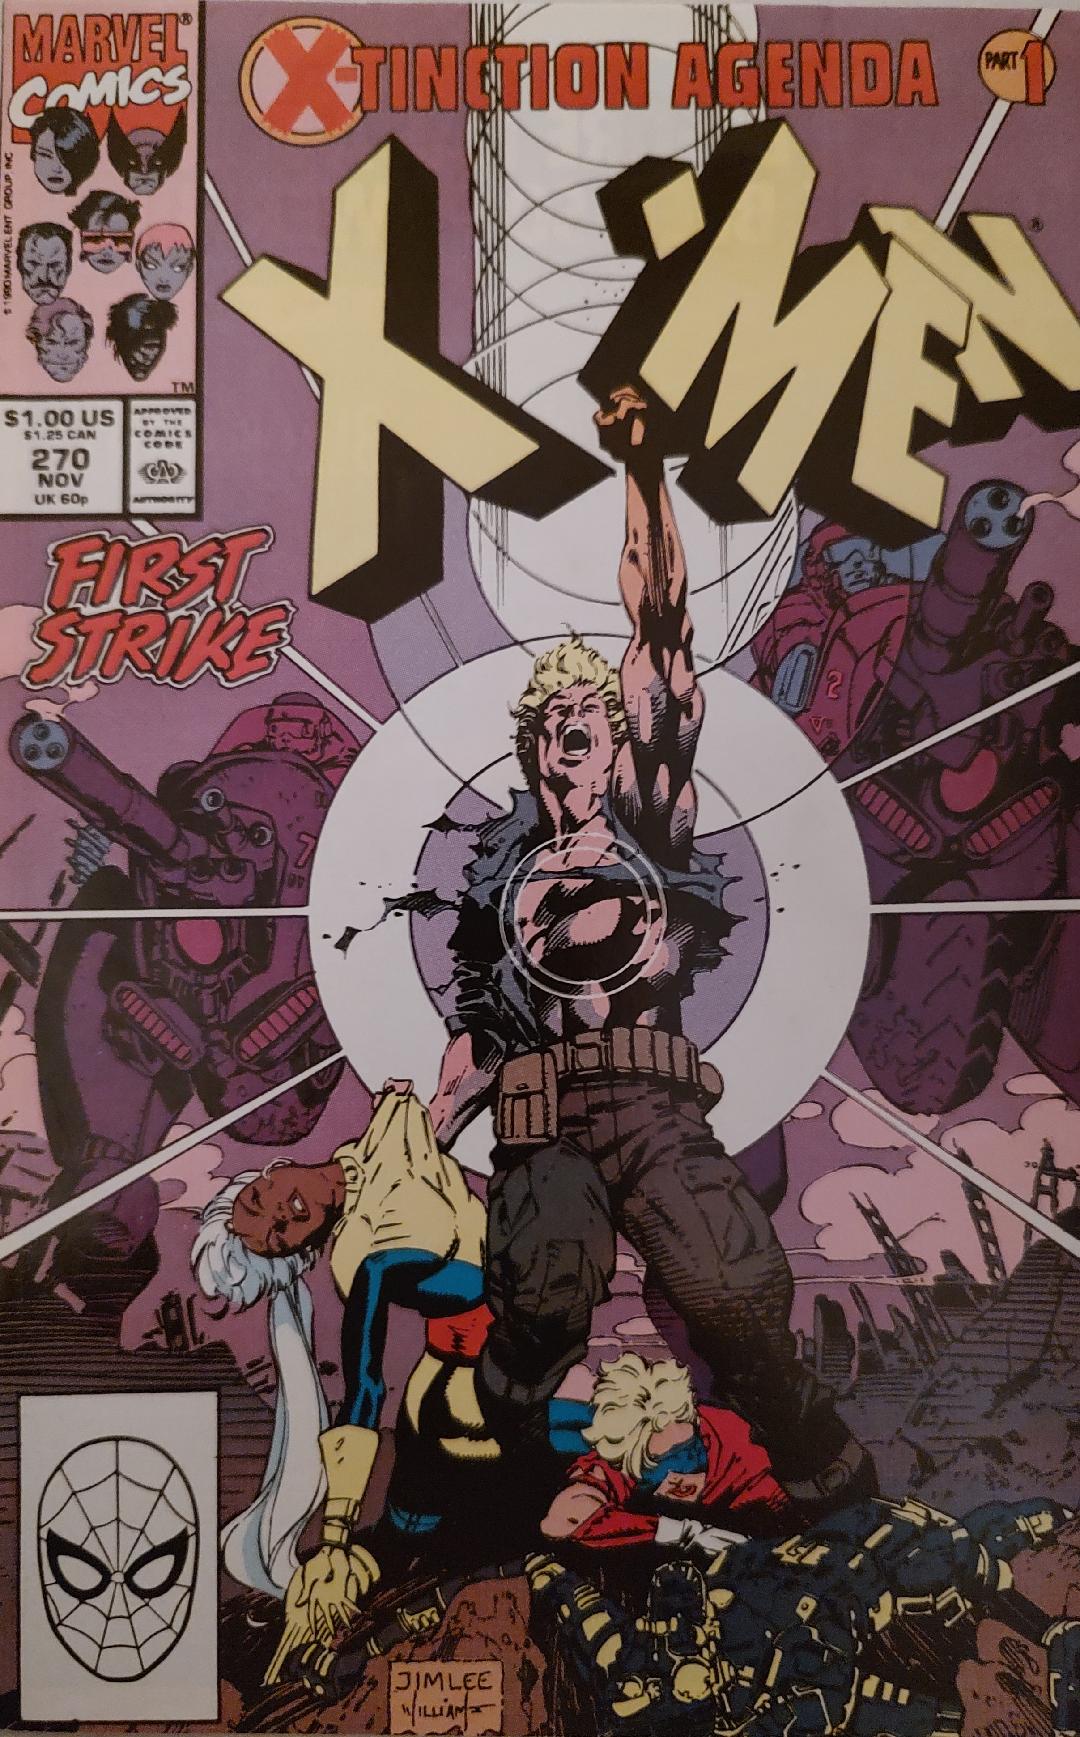 Uncanny X-Men #270 X-Tinction Agenda #1 of 9 Comic Book Cover